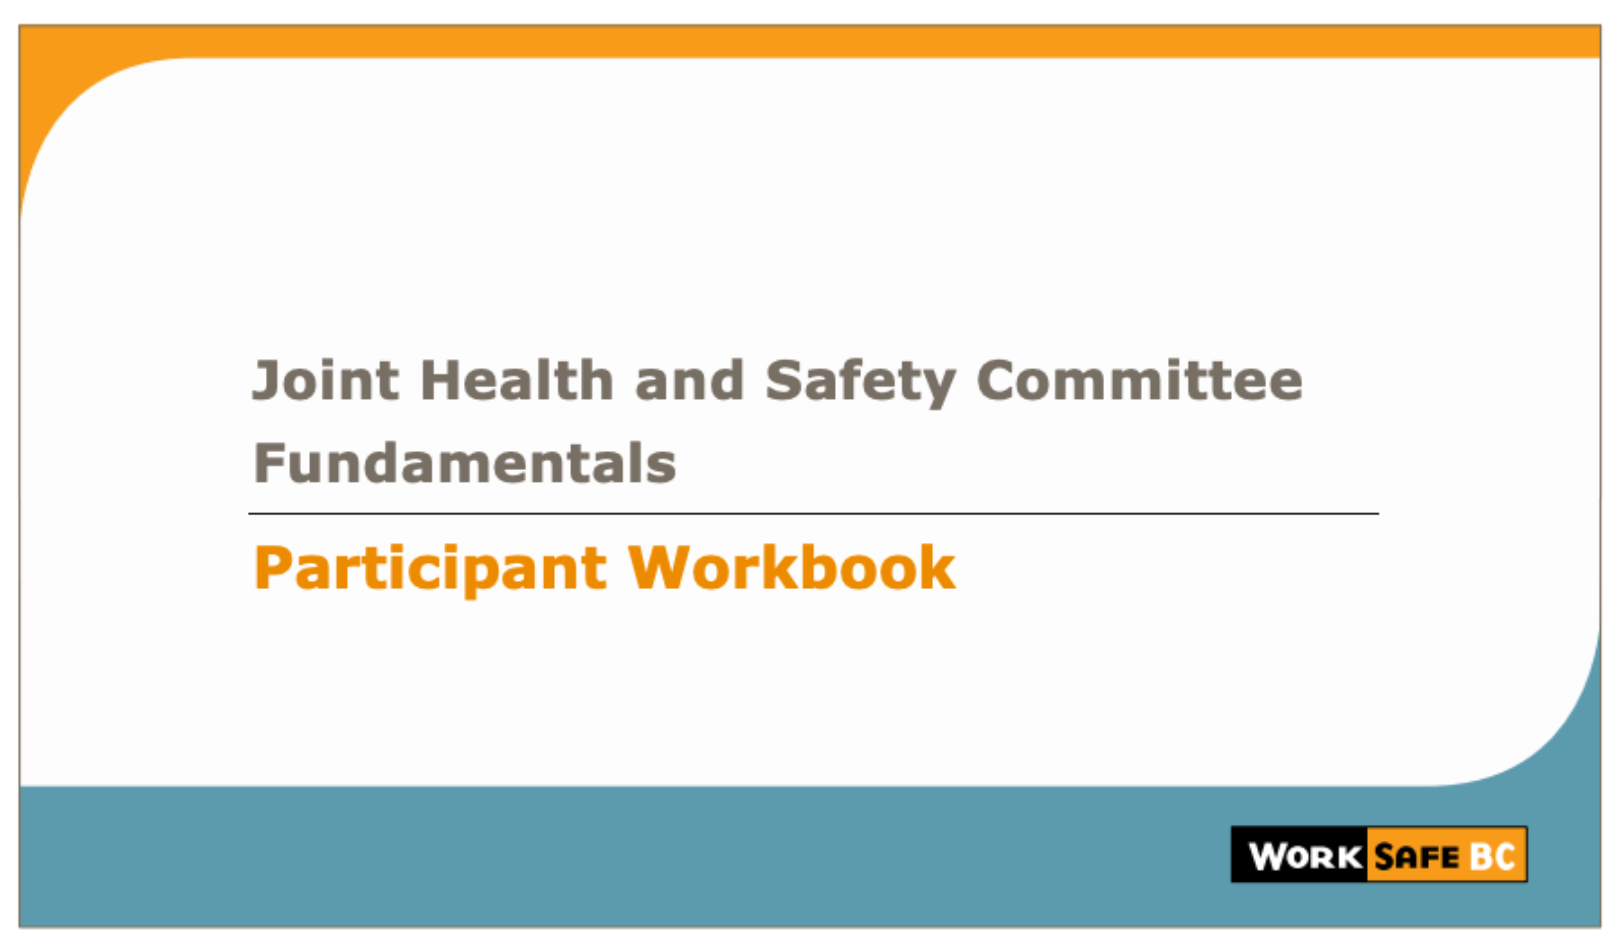 JHSC Fundamentals workbook